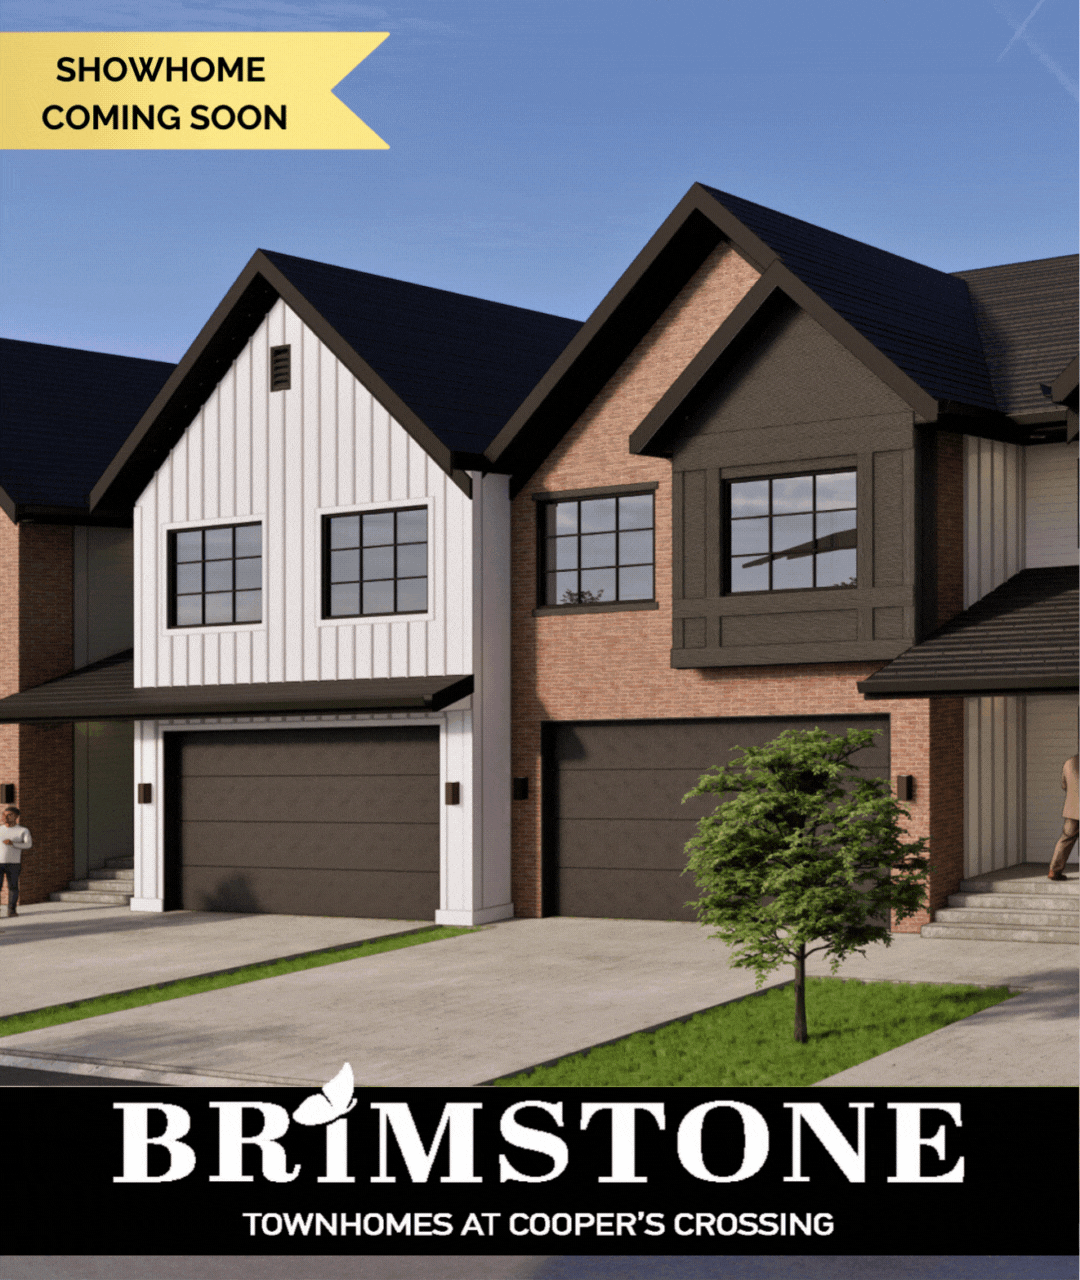 Brimstone Townhomes